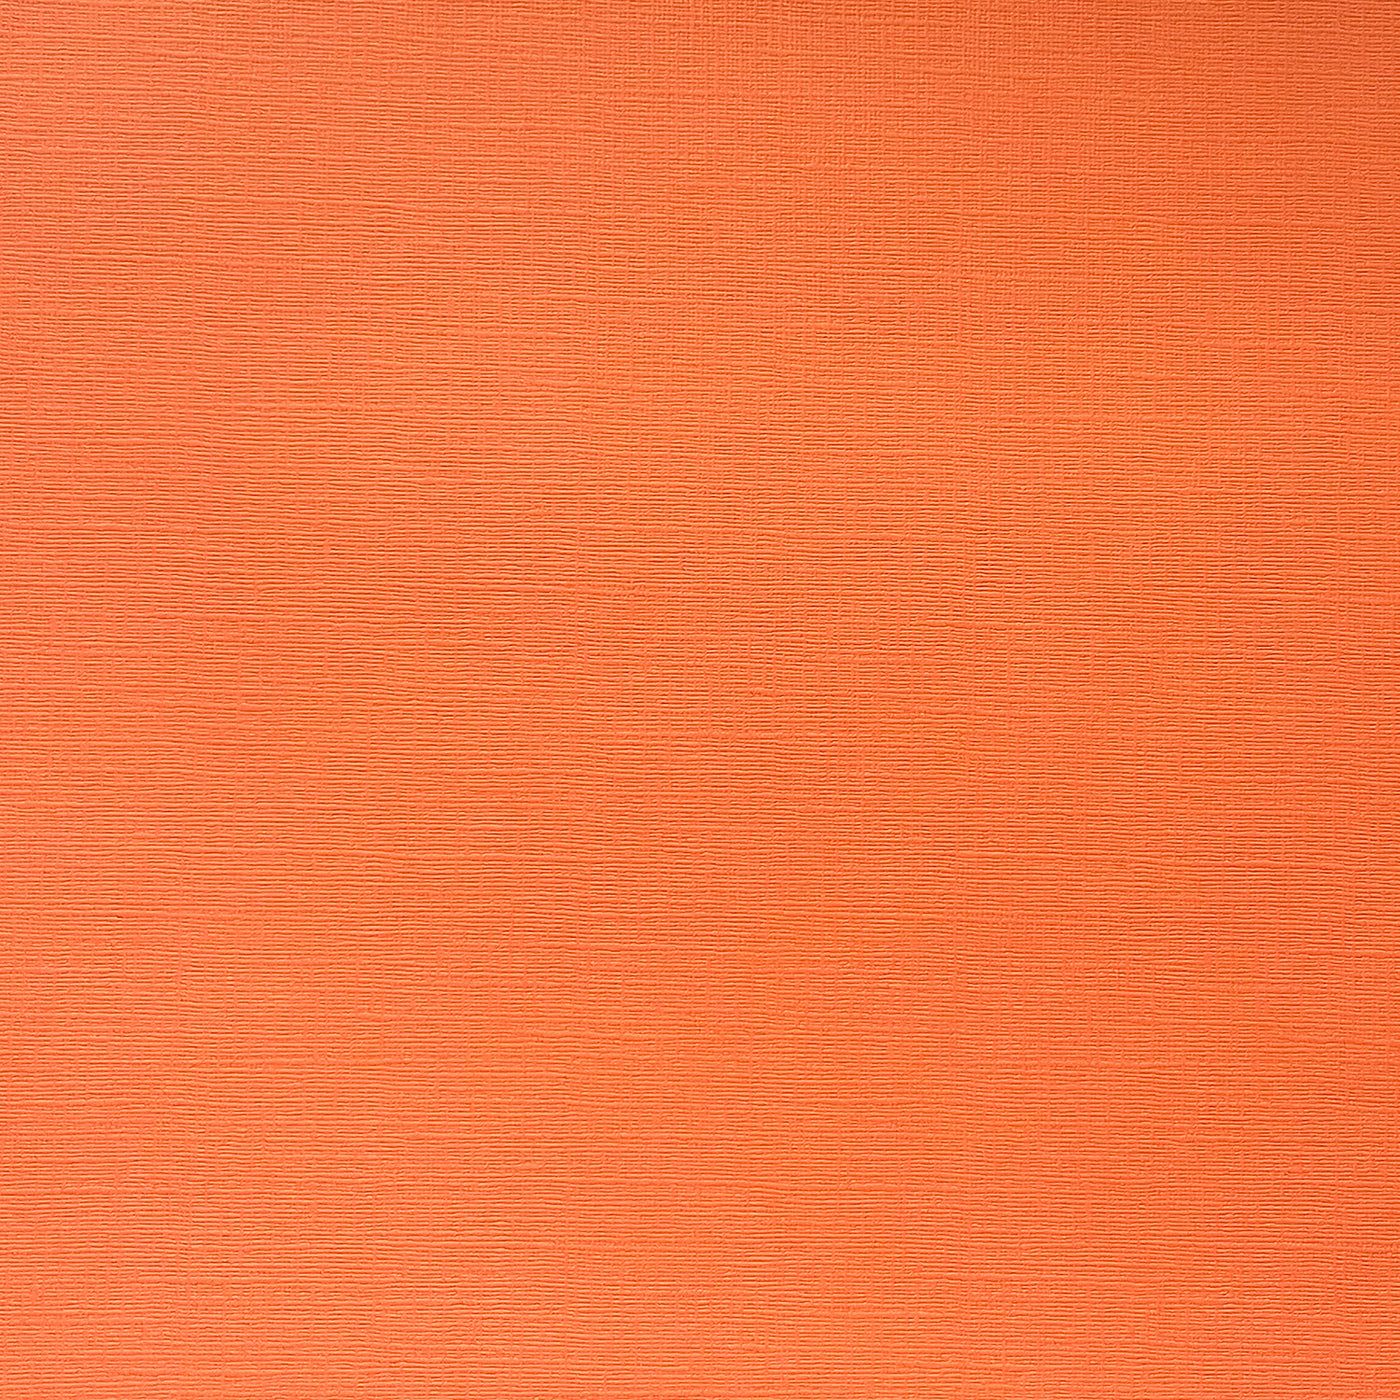 Mandarin - Textured 12x12 Cardstock - Bright orange canvas scrapbook paper